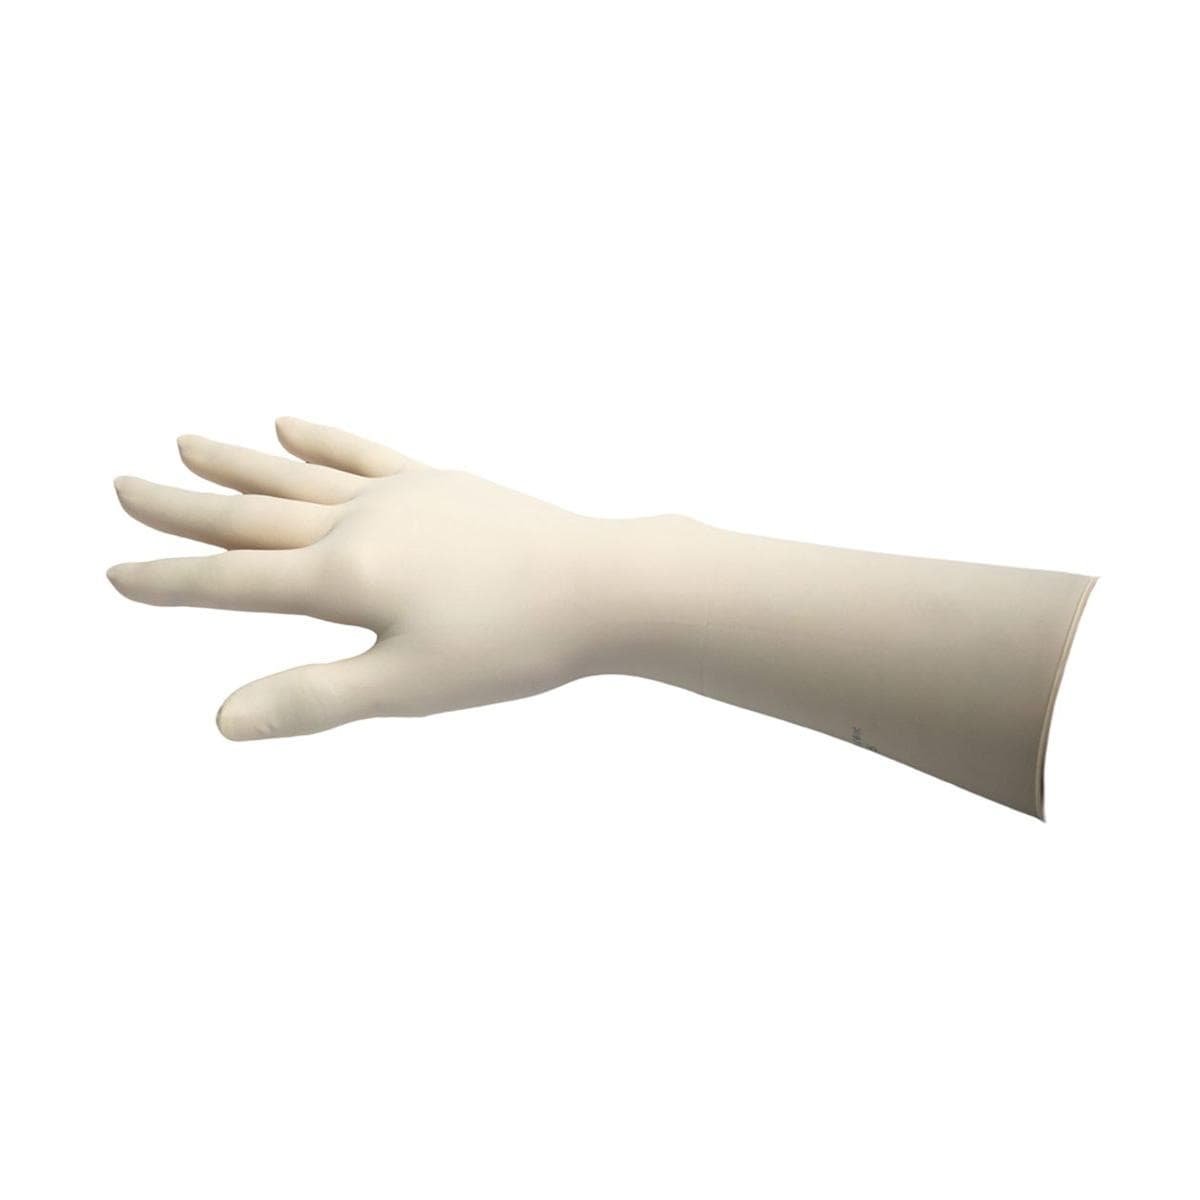 HS Criterion CR Polychloroprene Sterile Gloves Latex-Free Powder Free Size 5.5 Pairs 50pk